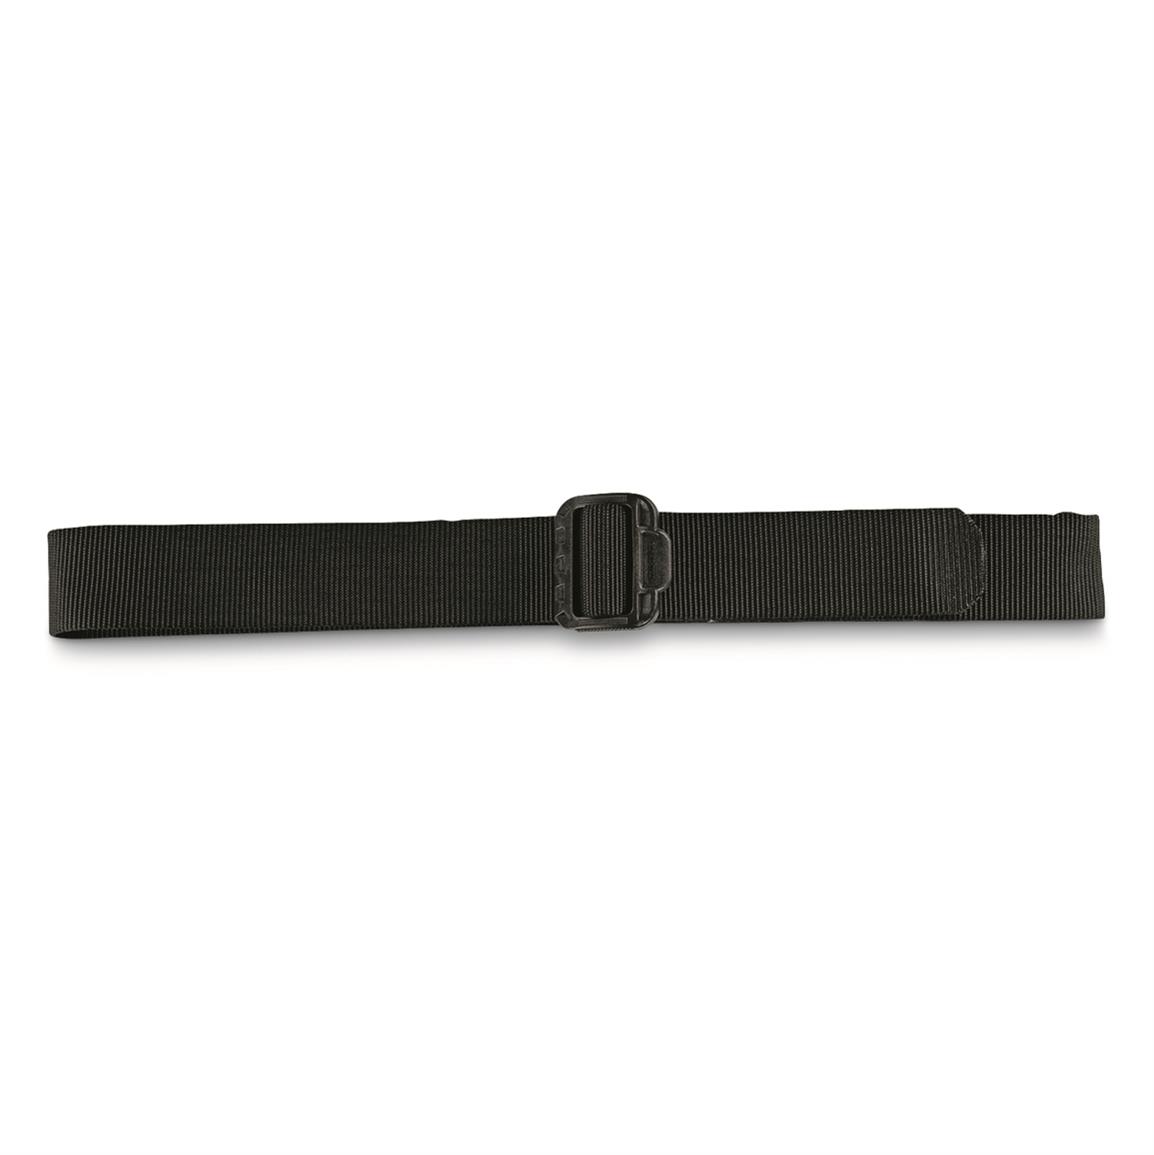 TRU-SPEC Security-Friendly Belt, Black